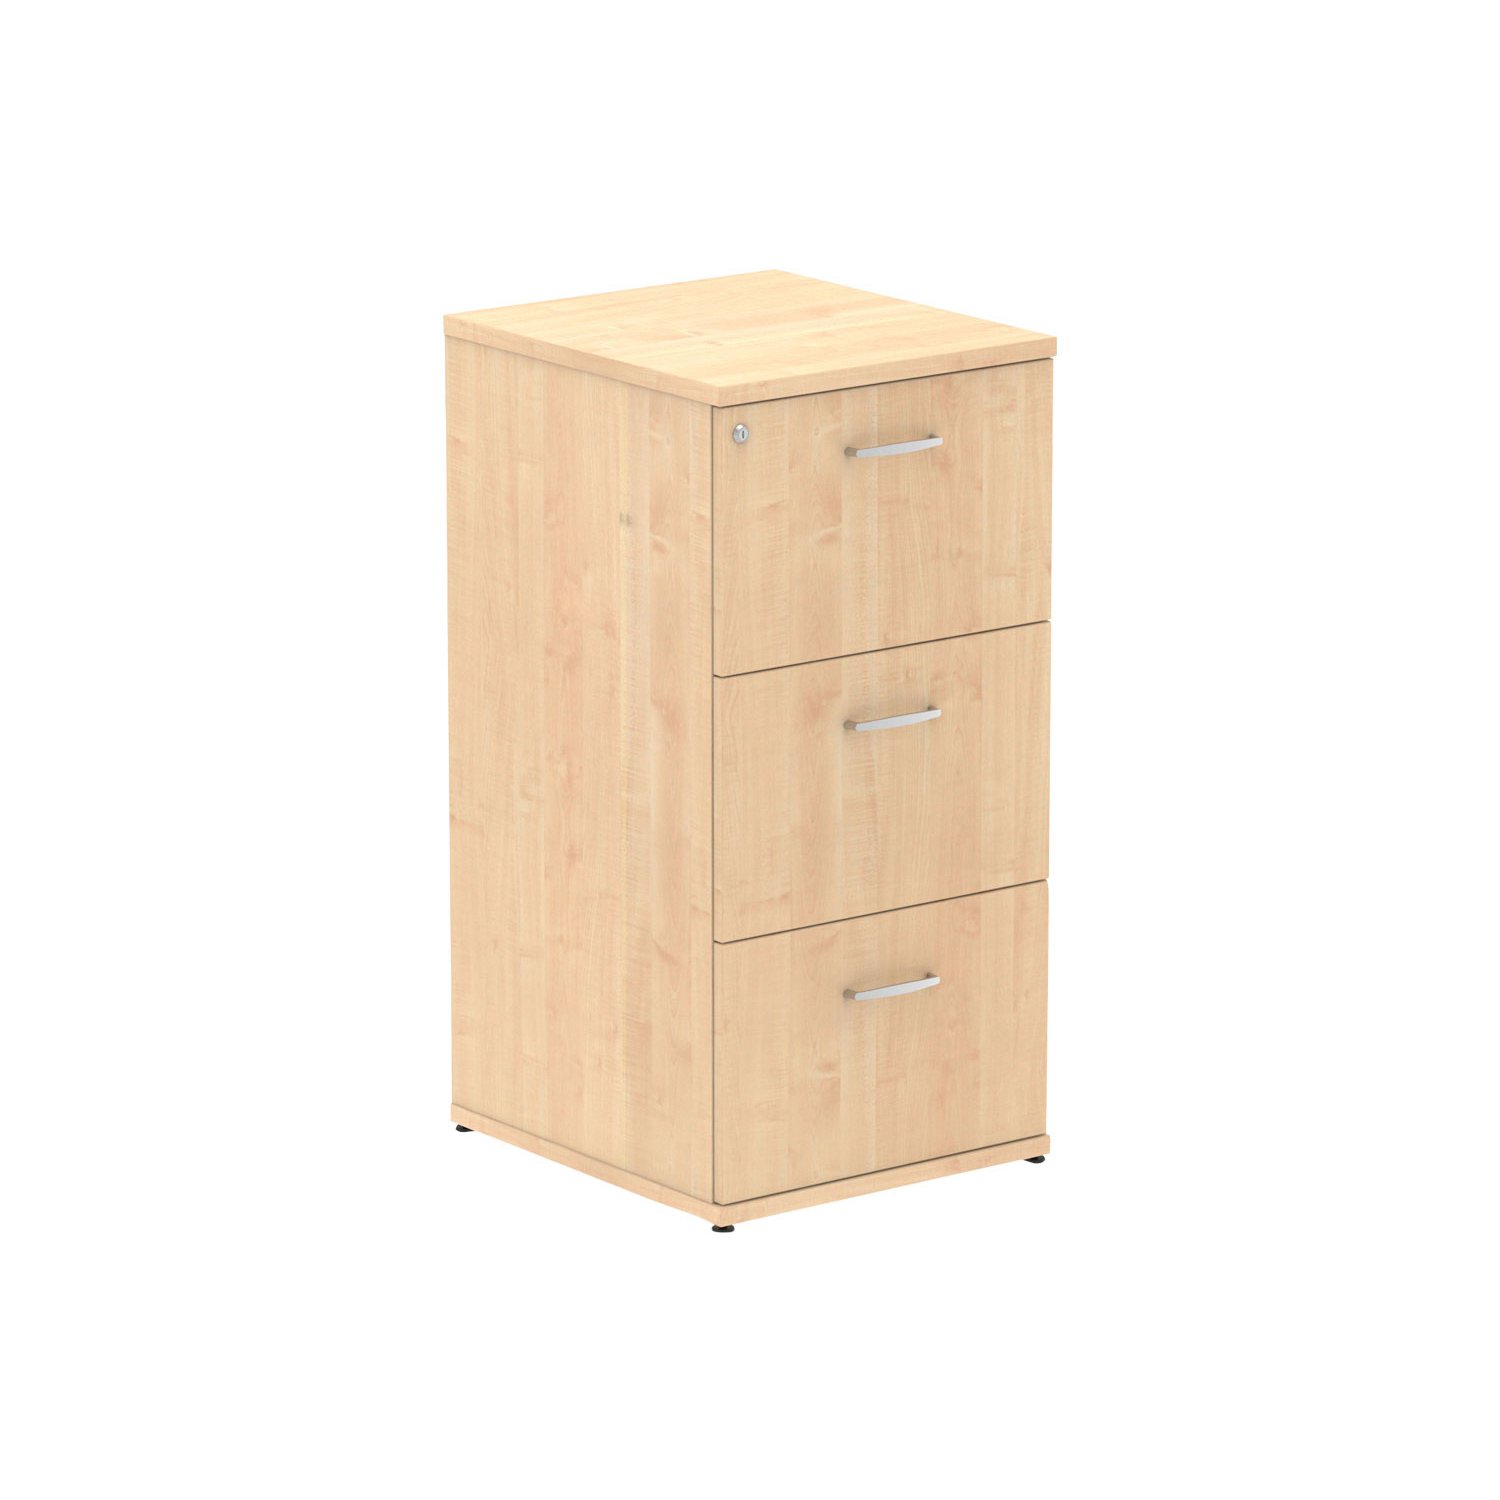 Pamola Filing Cabinets, Maple